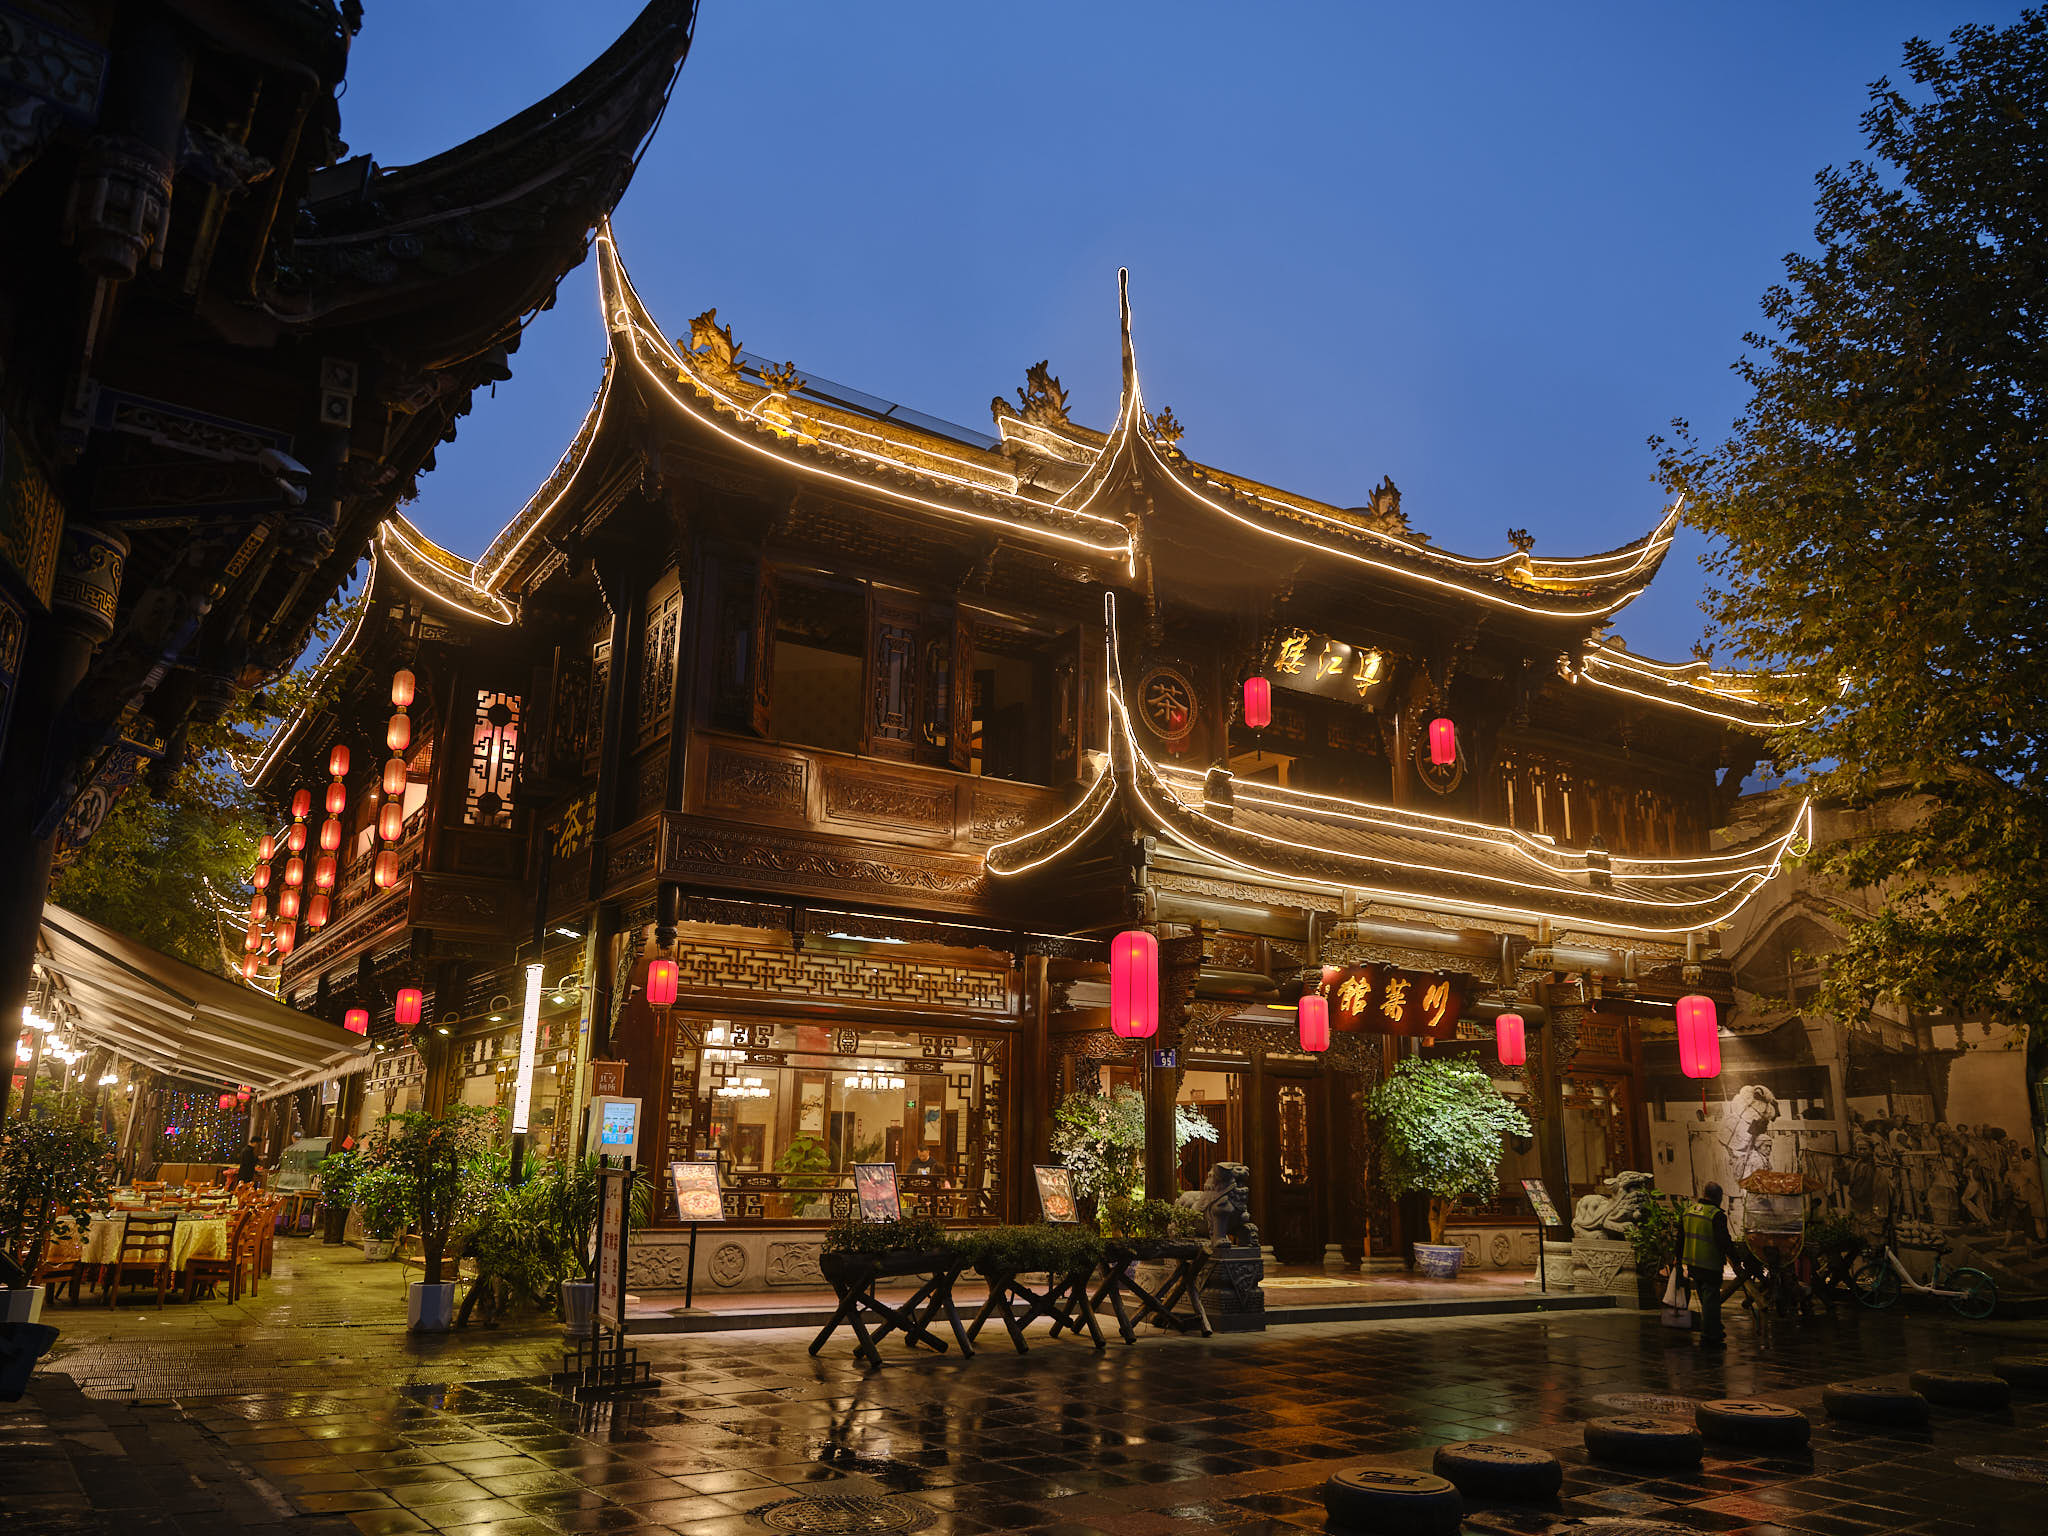 Ancient lit up building in Dujiangyan Chengdu